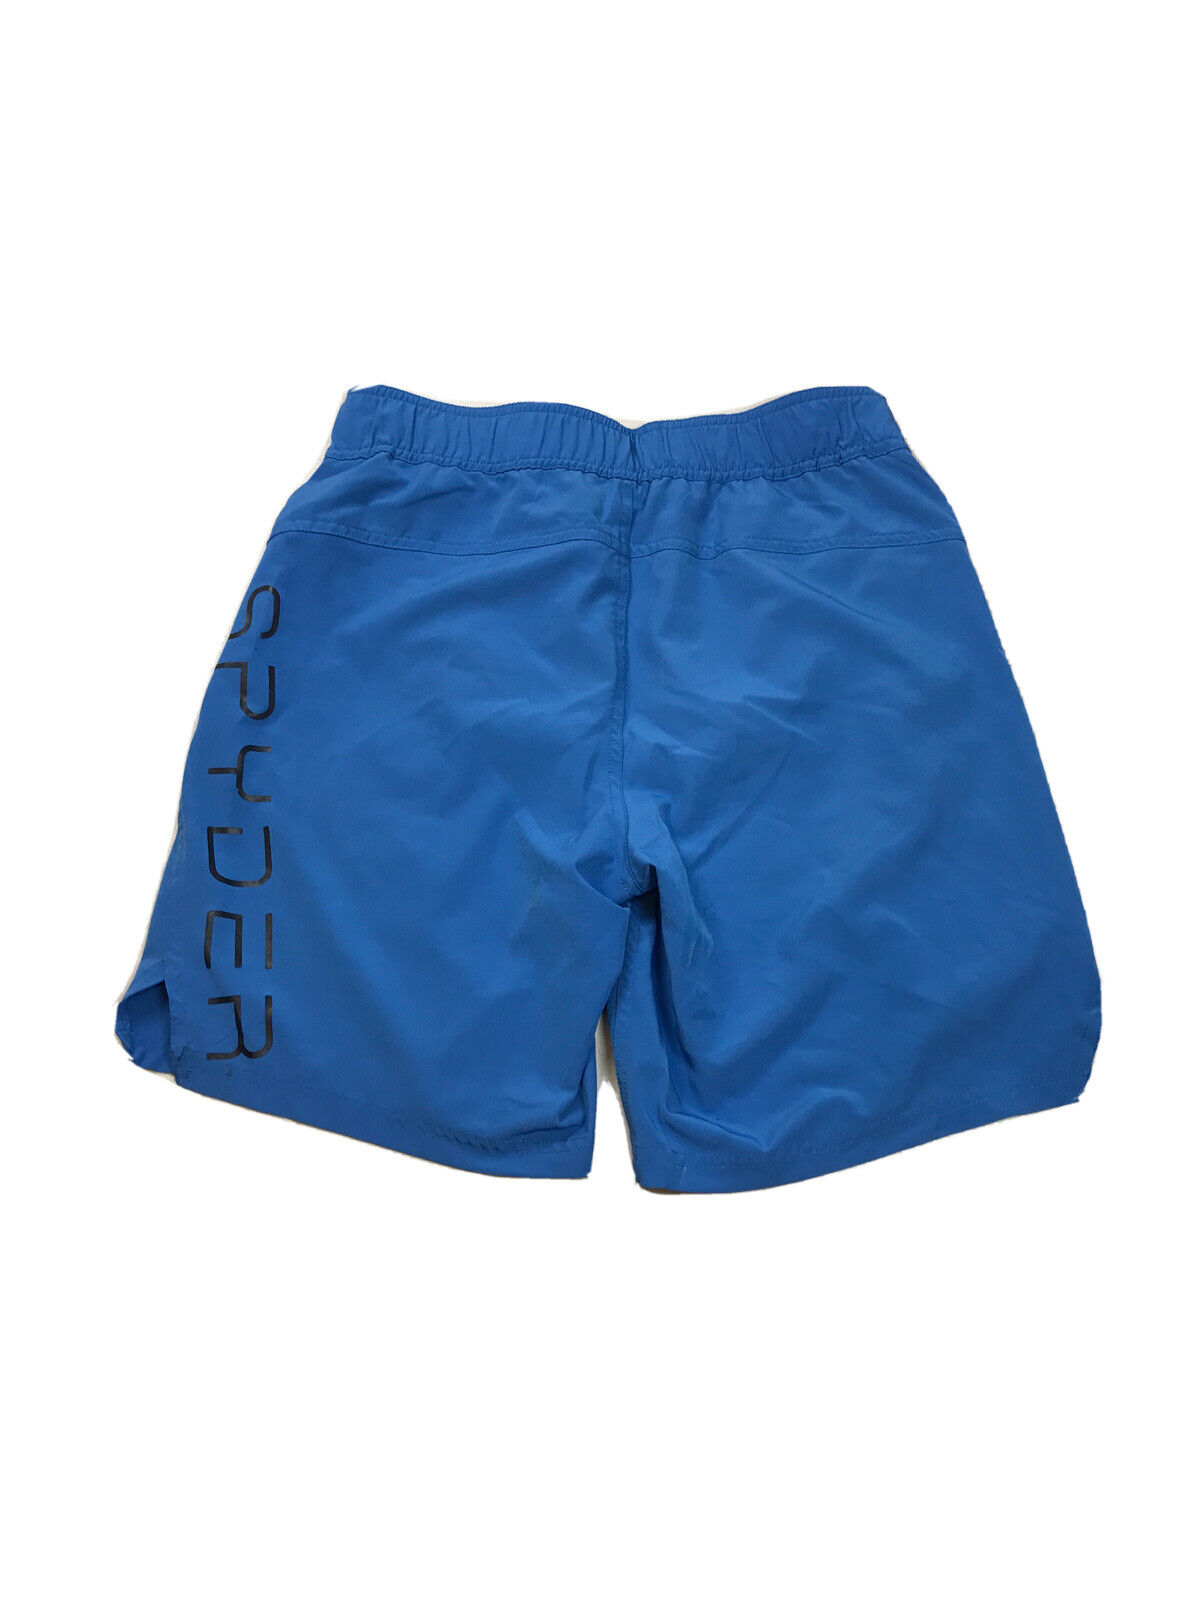 Spyder Swim Men's Blue Mesh Lined Swim Trunks W/Pockets - S